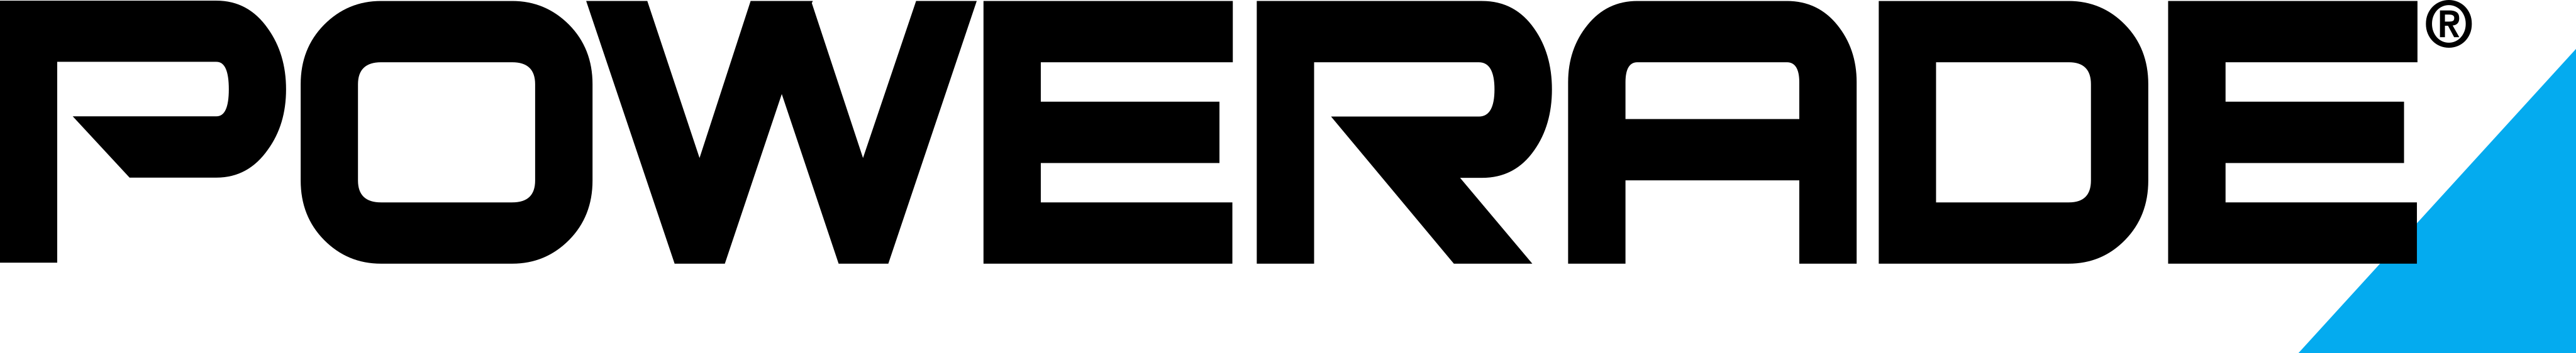 powerade-logo-1